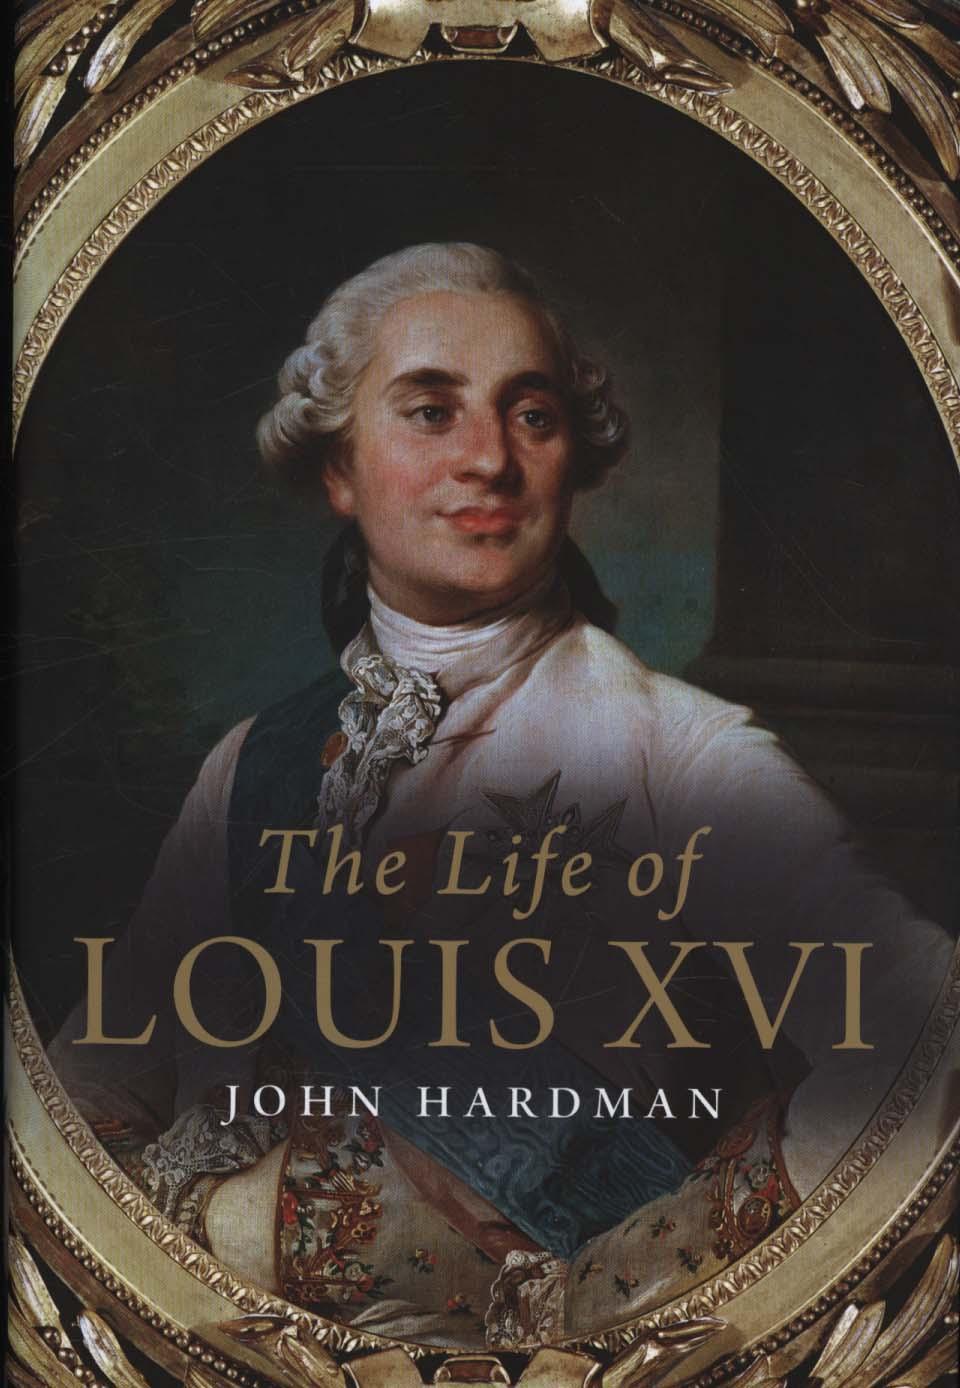 Life of Louis XVI